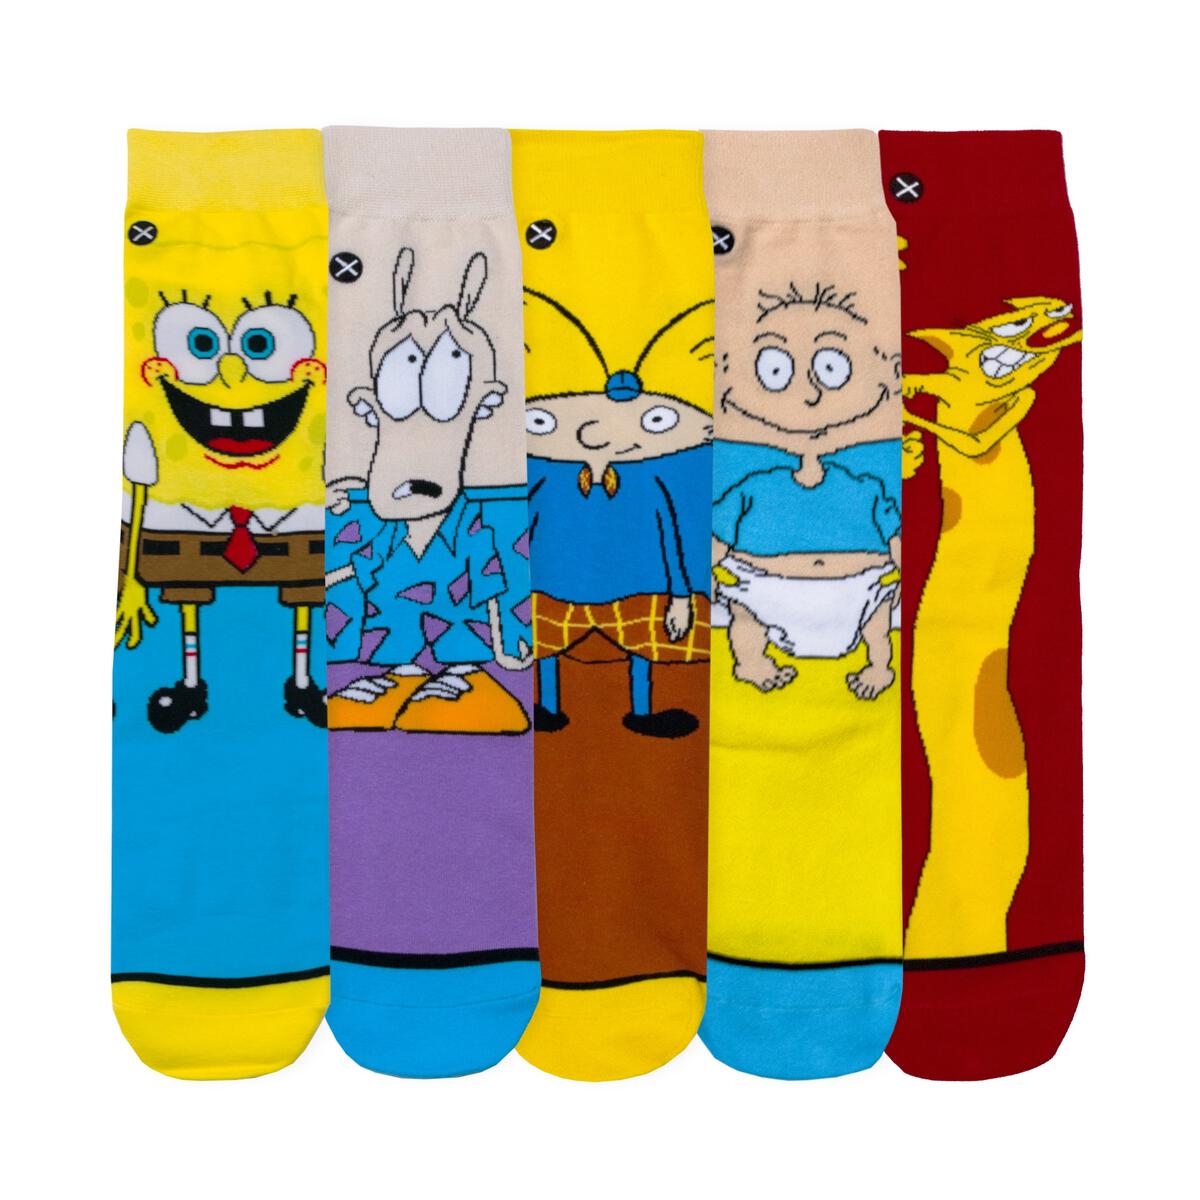 Odd Sox “Nickelodeon 5 Pack” Socks